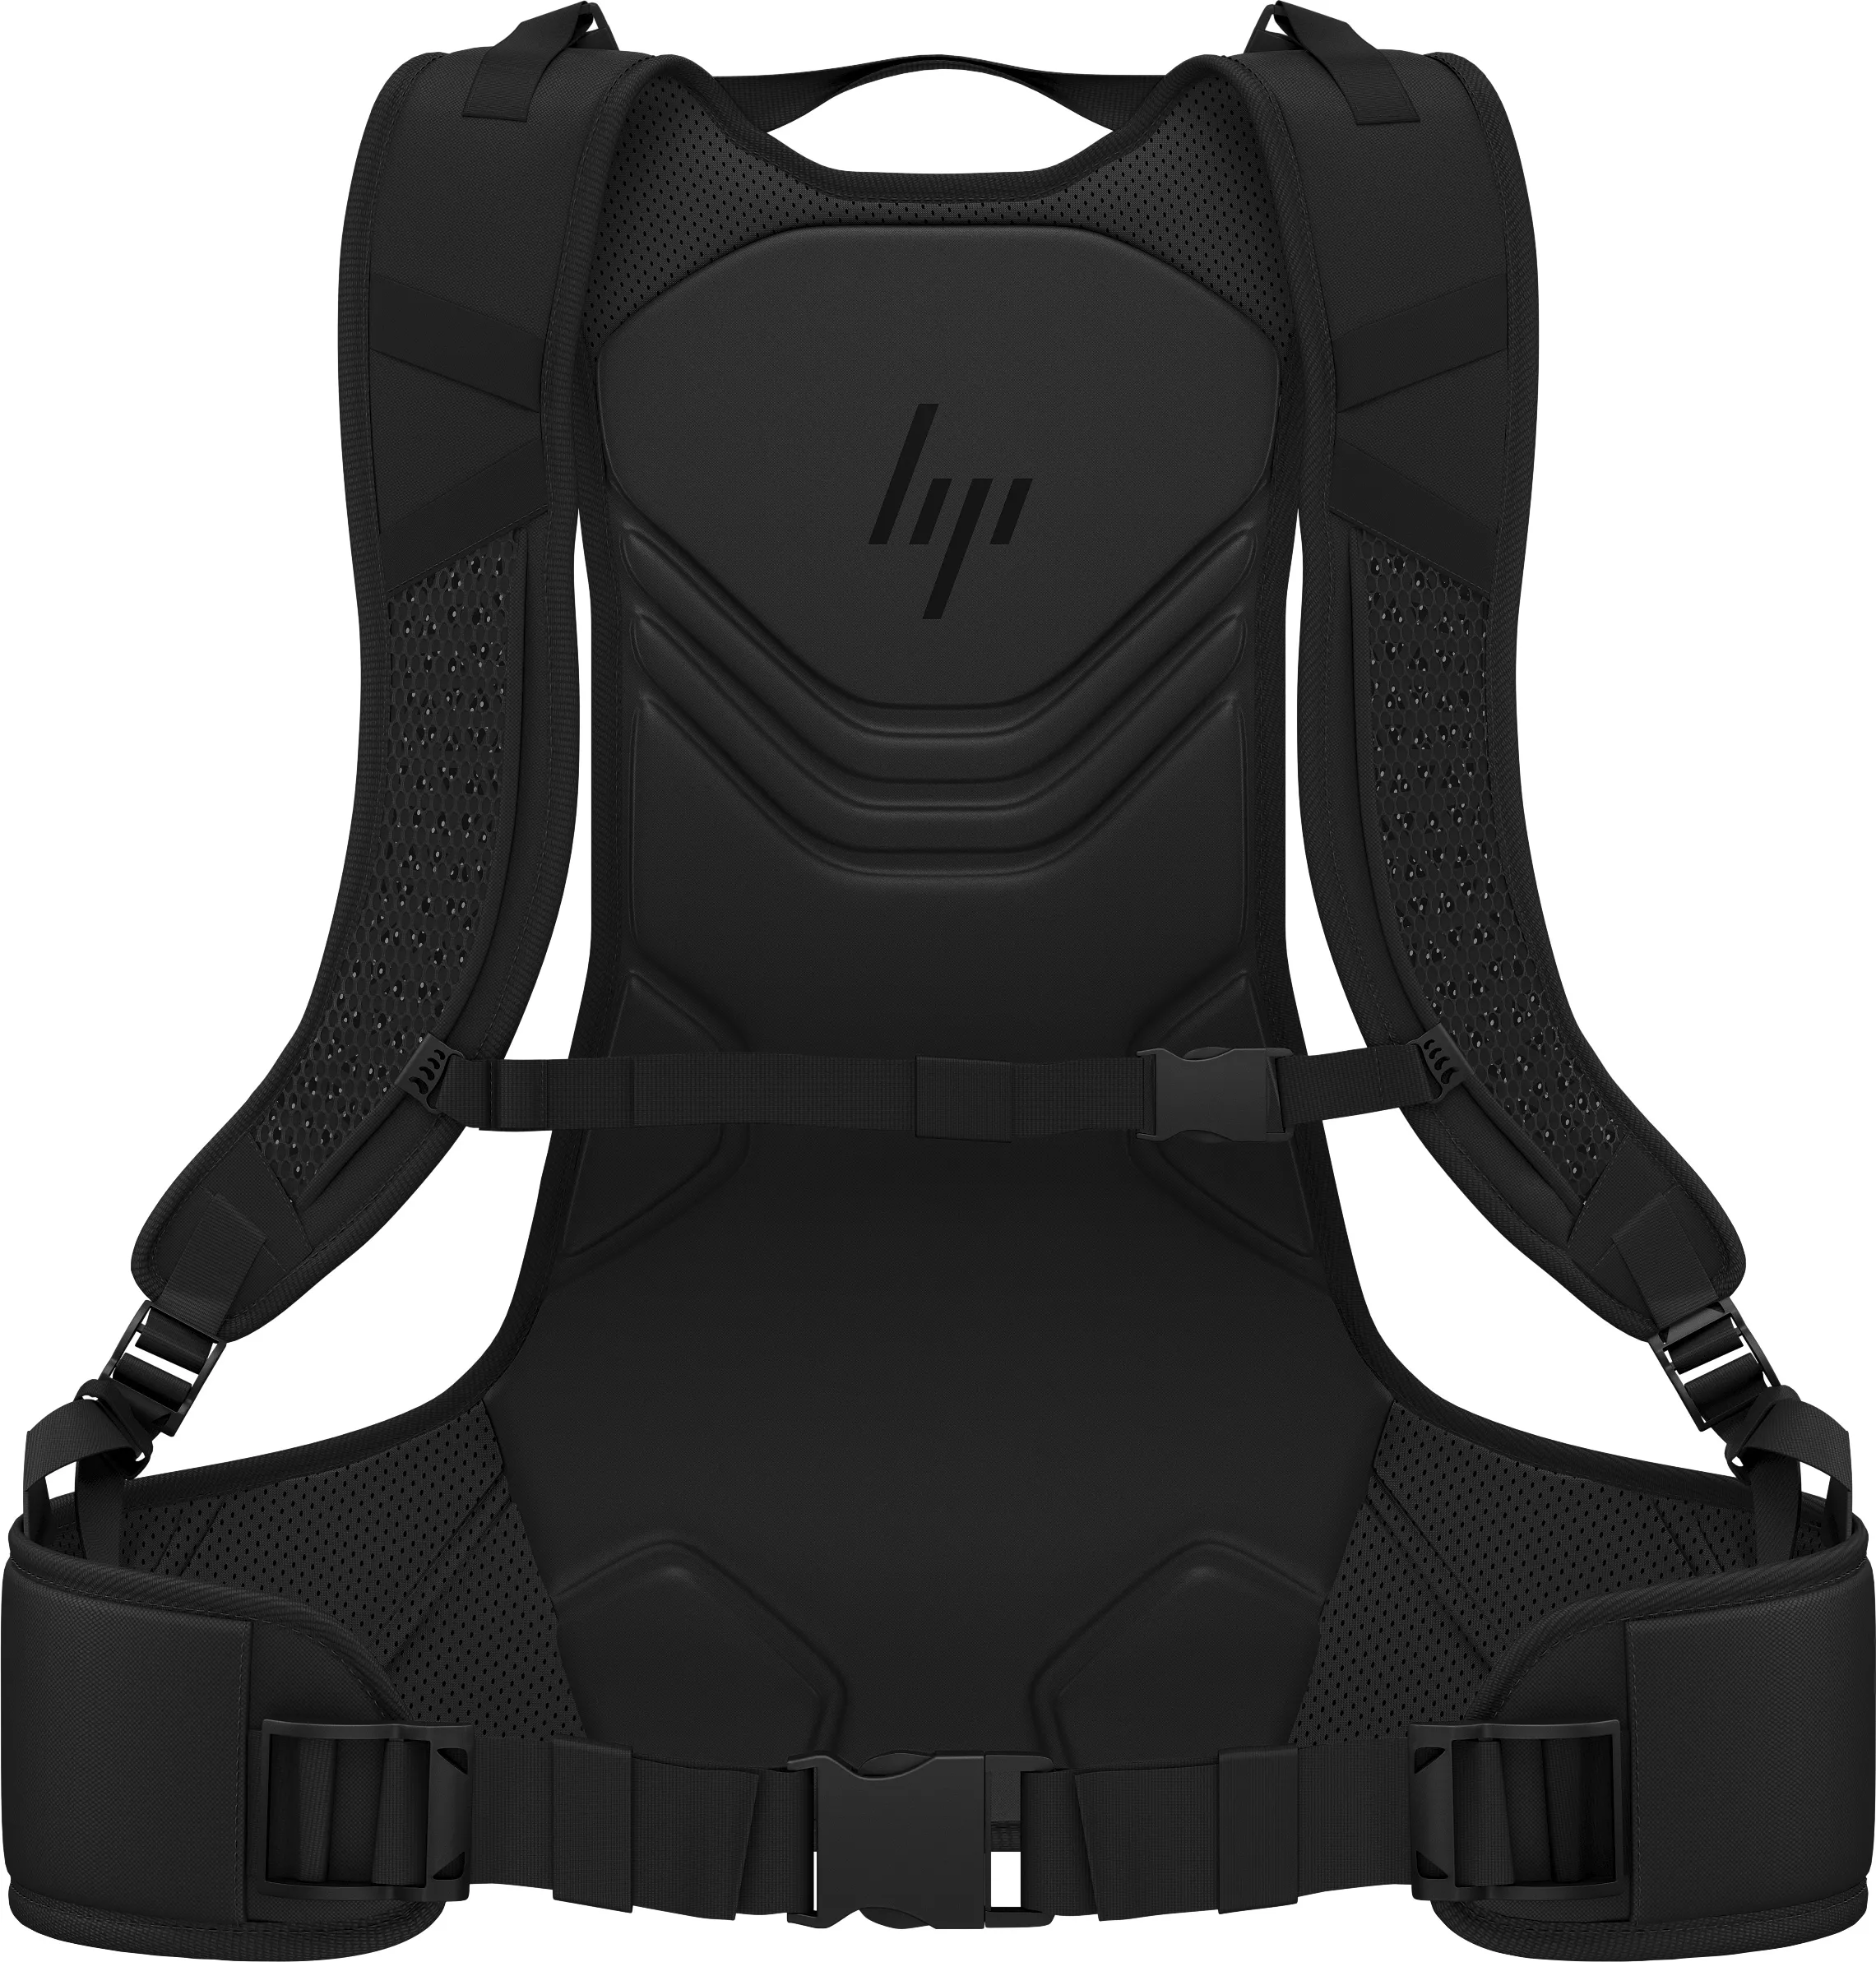 Revendeur officiel Sacoche & Housse HP VR Backpack G2 Harness